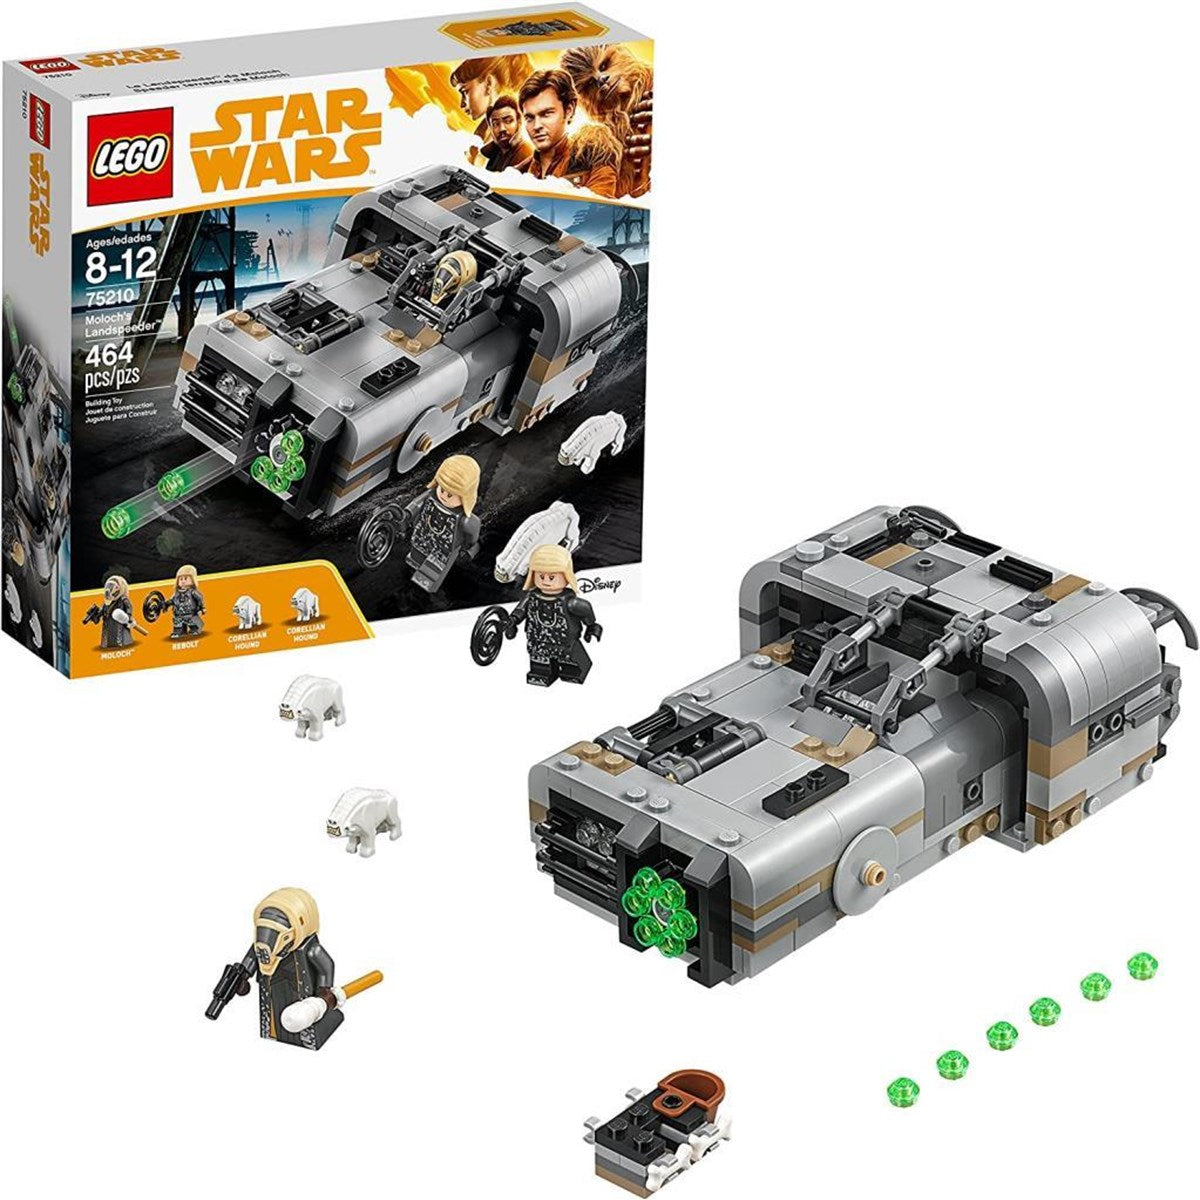 Lego Star Wars Moloch'un Landspeeder'ı 75210 | Toysall